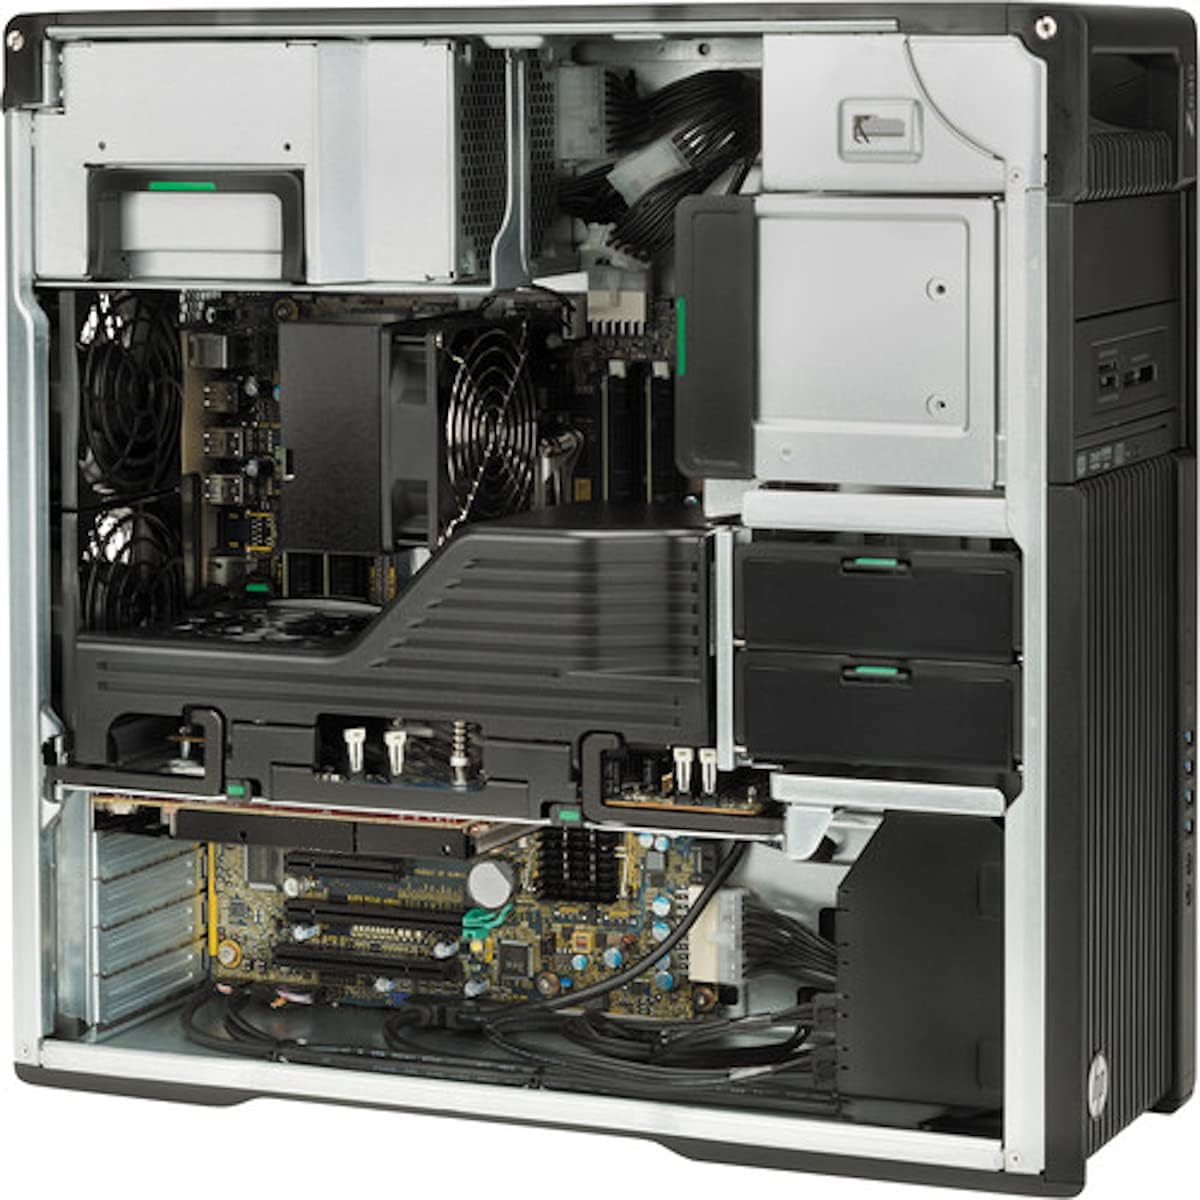 HP Z620 Workstation Intel Xeon E5-2670 2.6GHz 16-Cores 32GB RAM 500GB Hard Drive NVIDIA Quadro 4000 (Renewed)